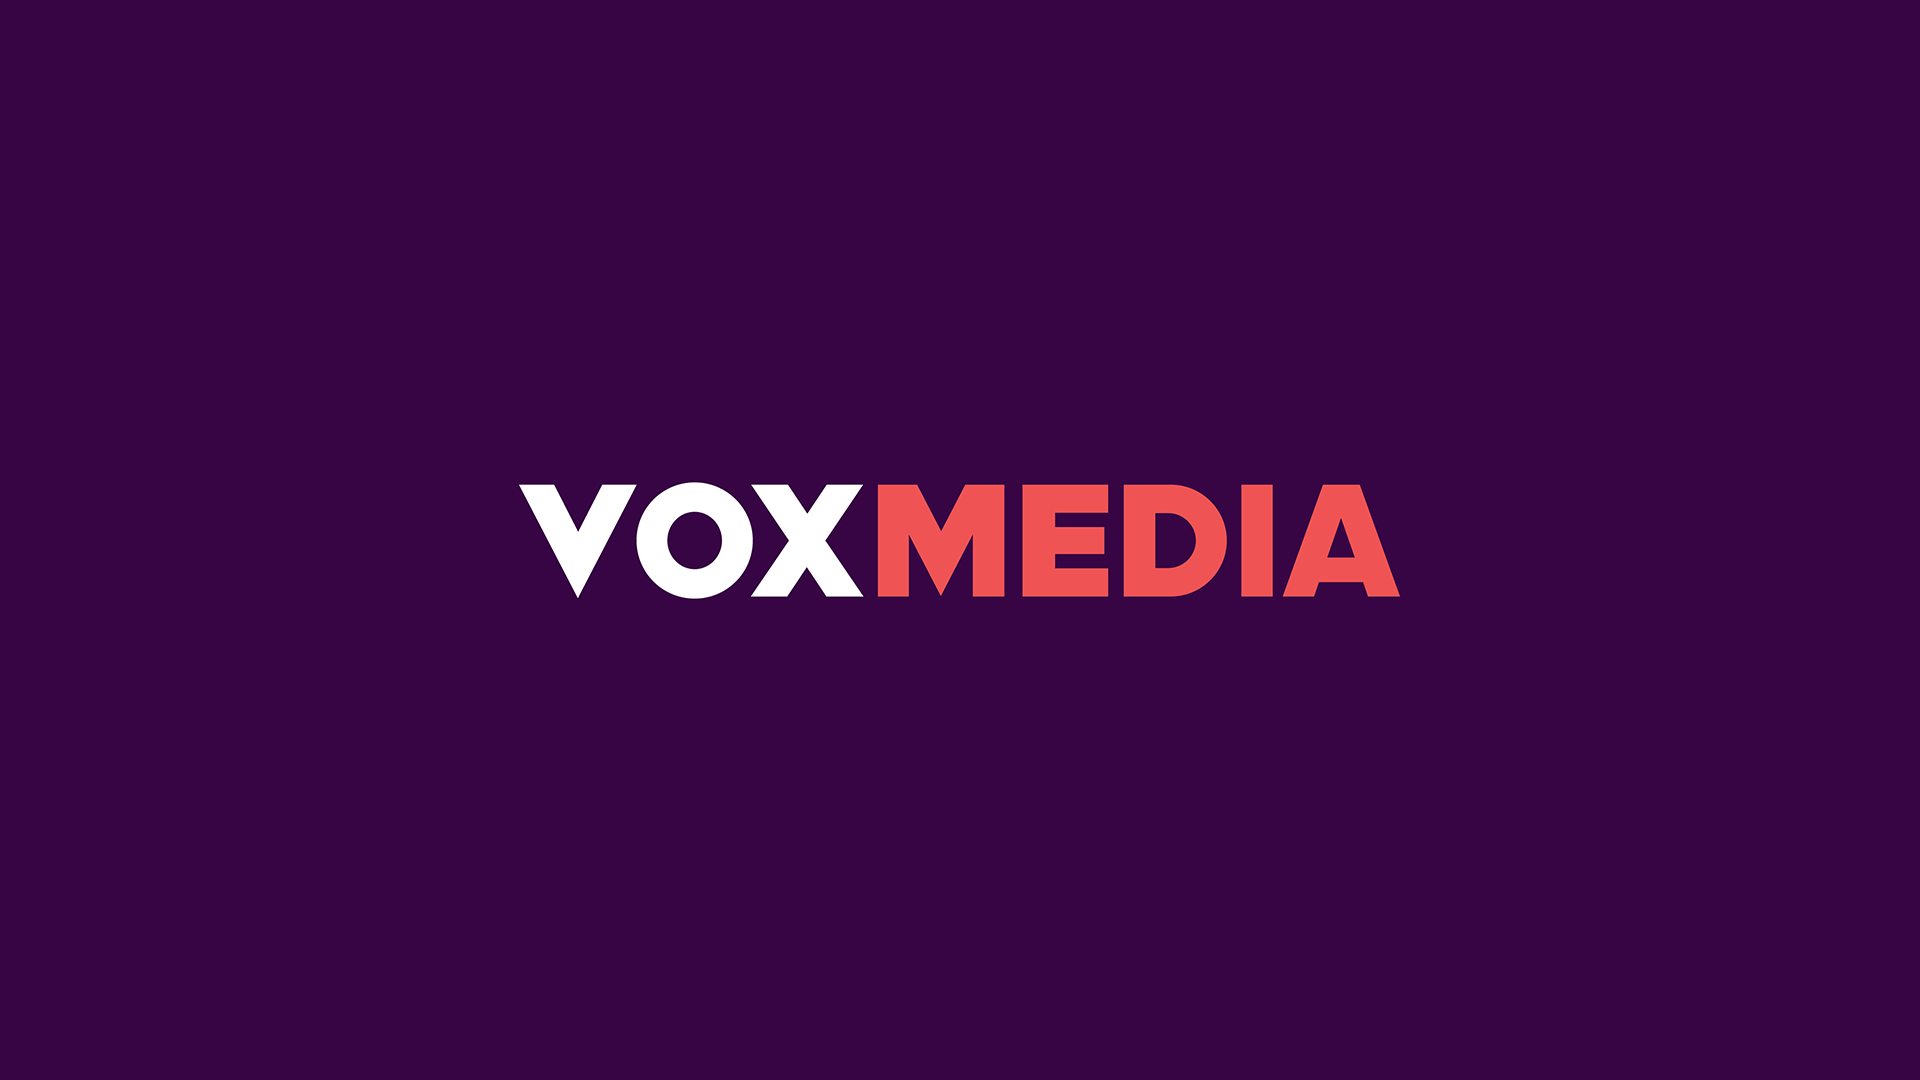 New Vox Media Logo san serif font on purple background